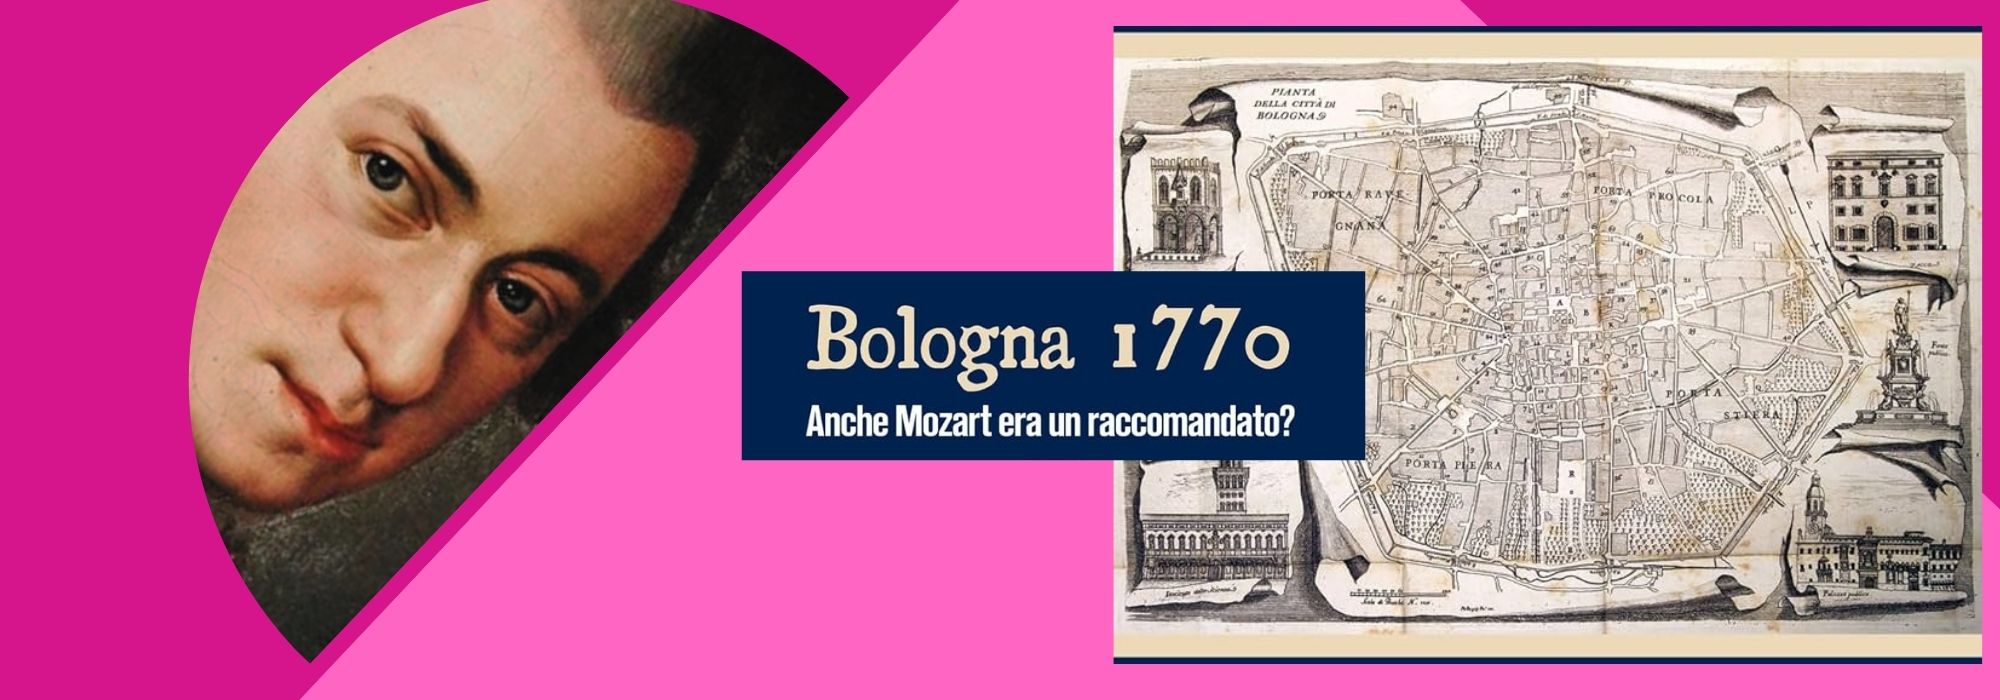 Bologna 1770. Anche Mozart era un raccomandato?